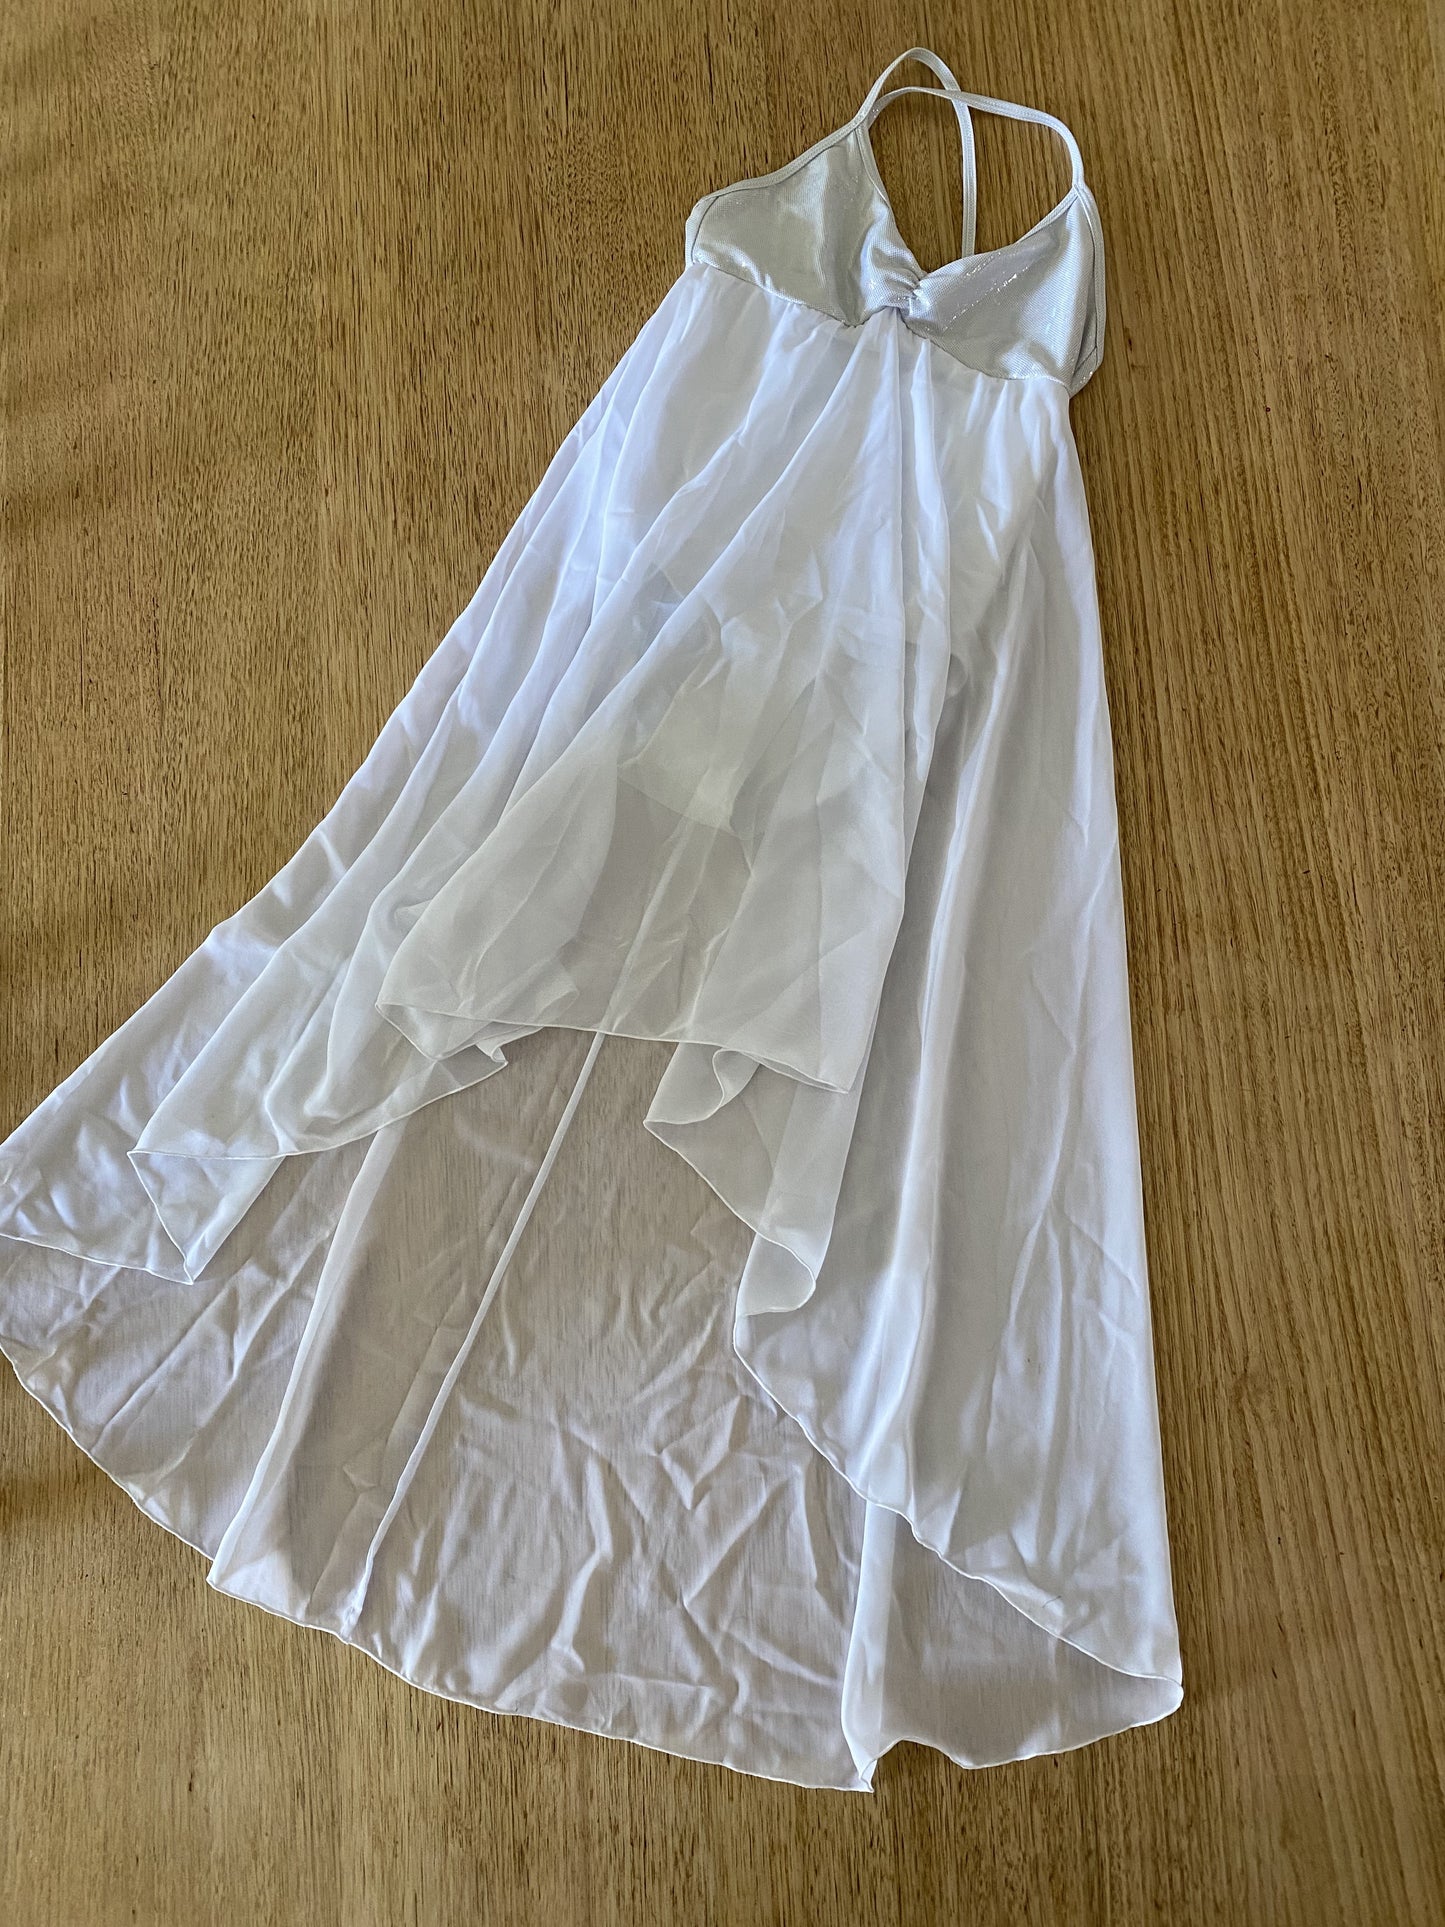 A1235 Angel dress - white size Med Child